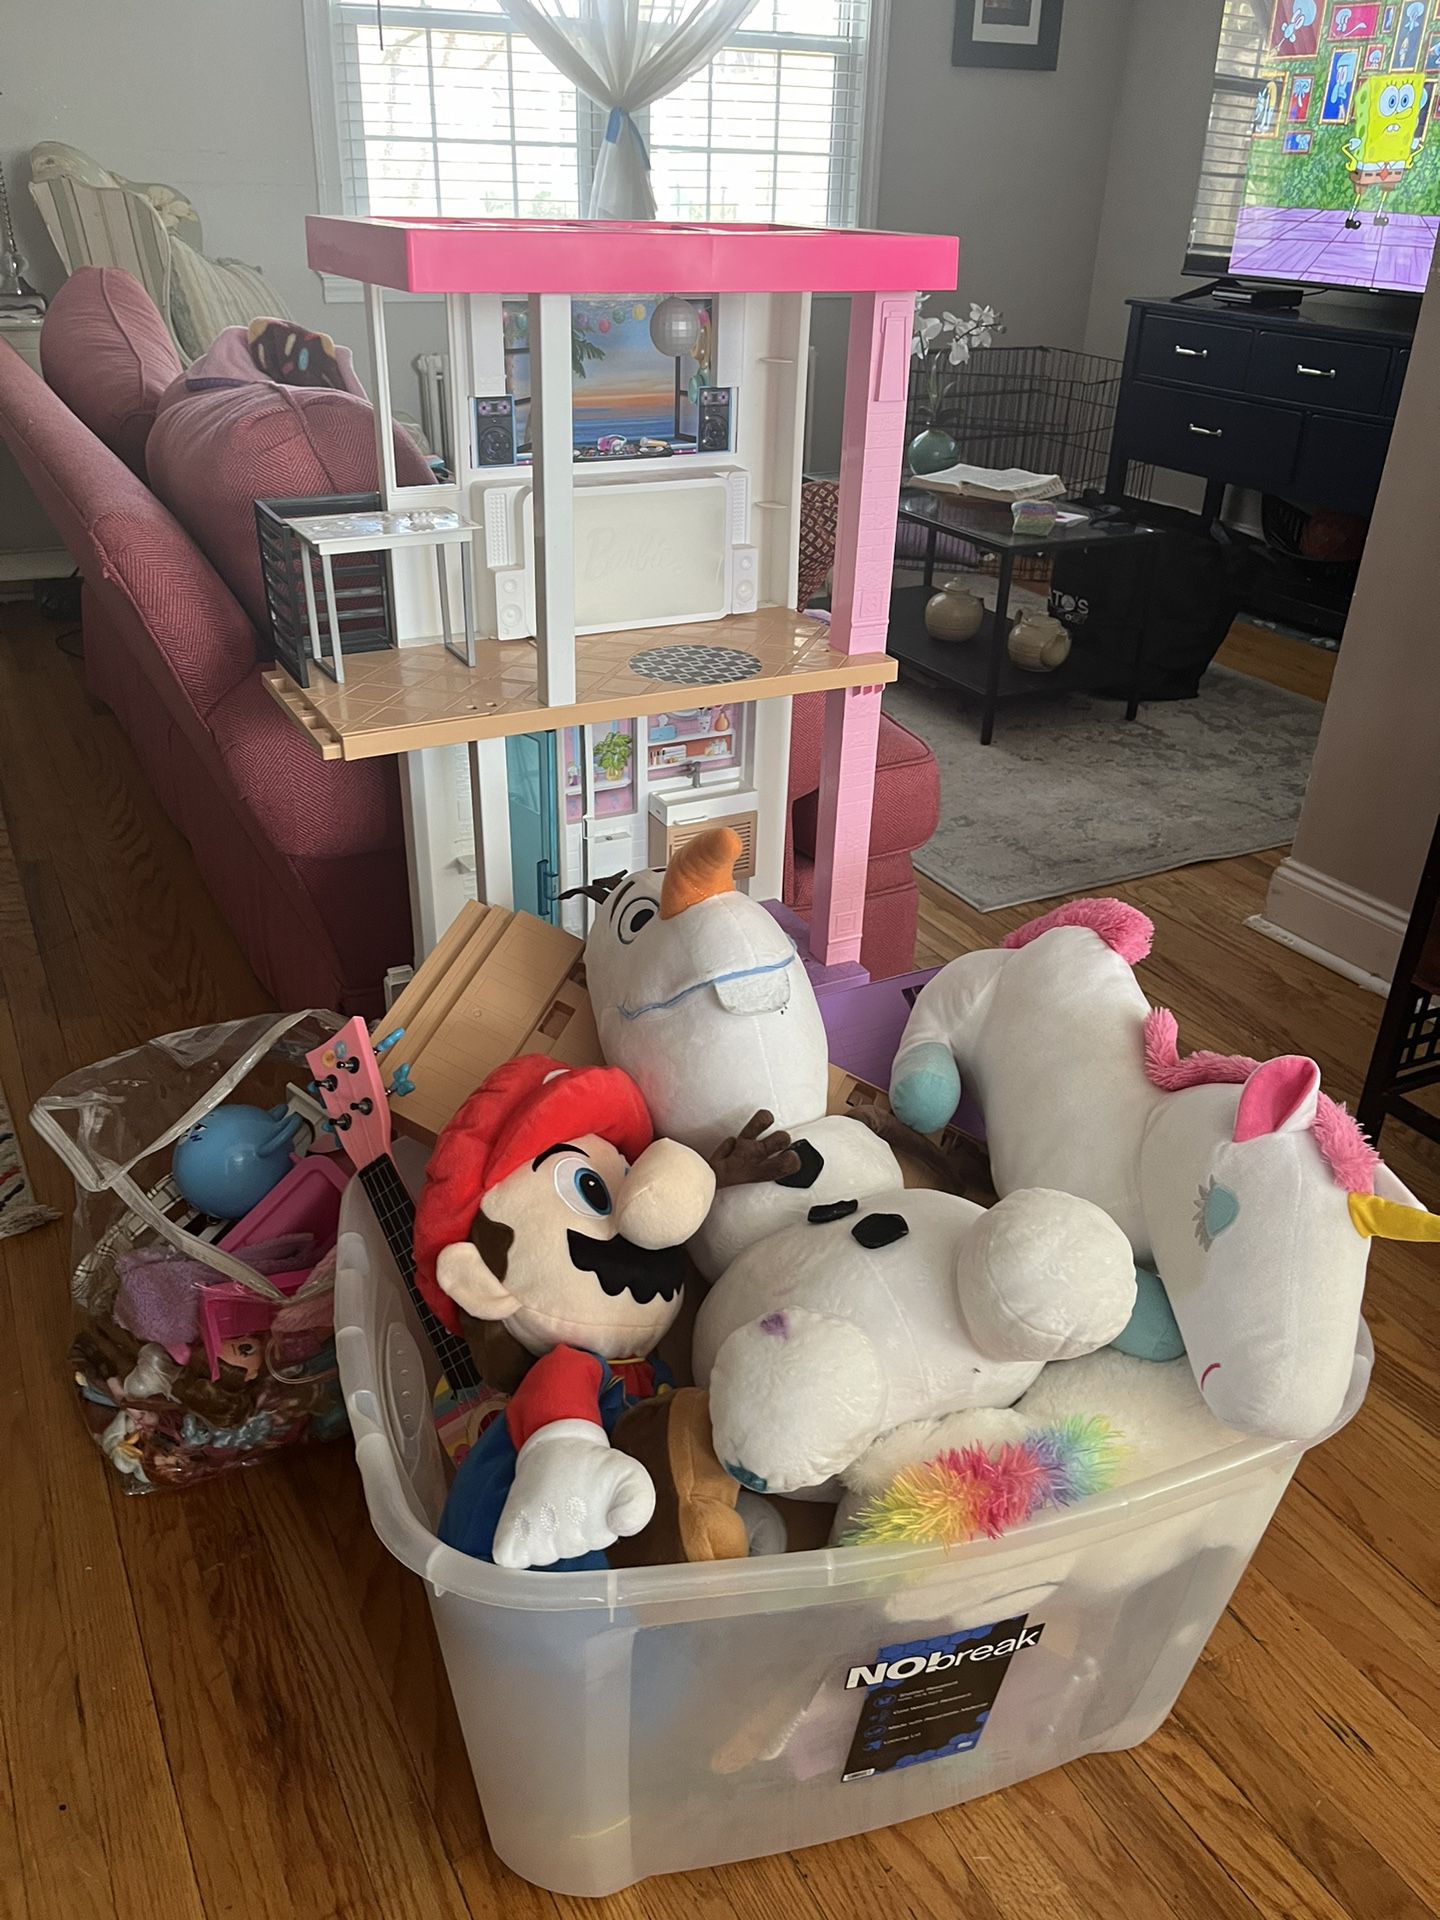 Barbie Dream House, Stuffed Animals, Bag Of Toys